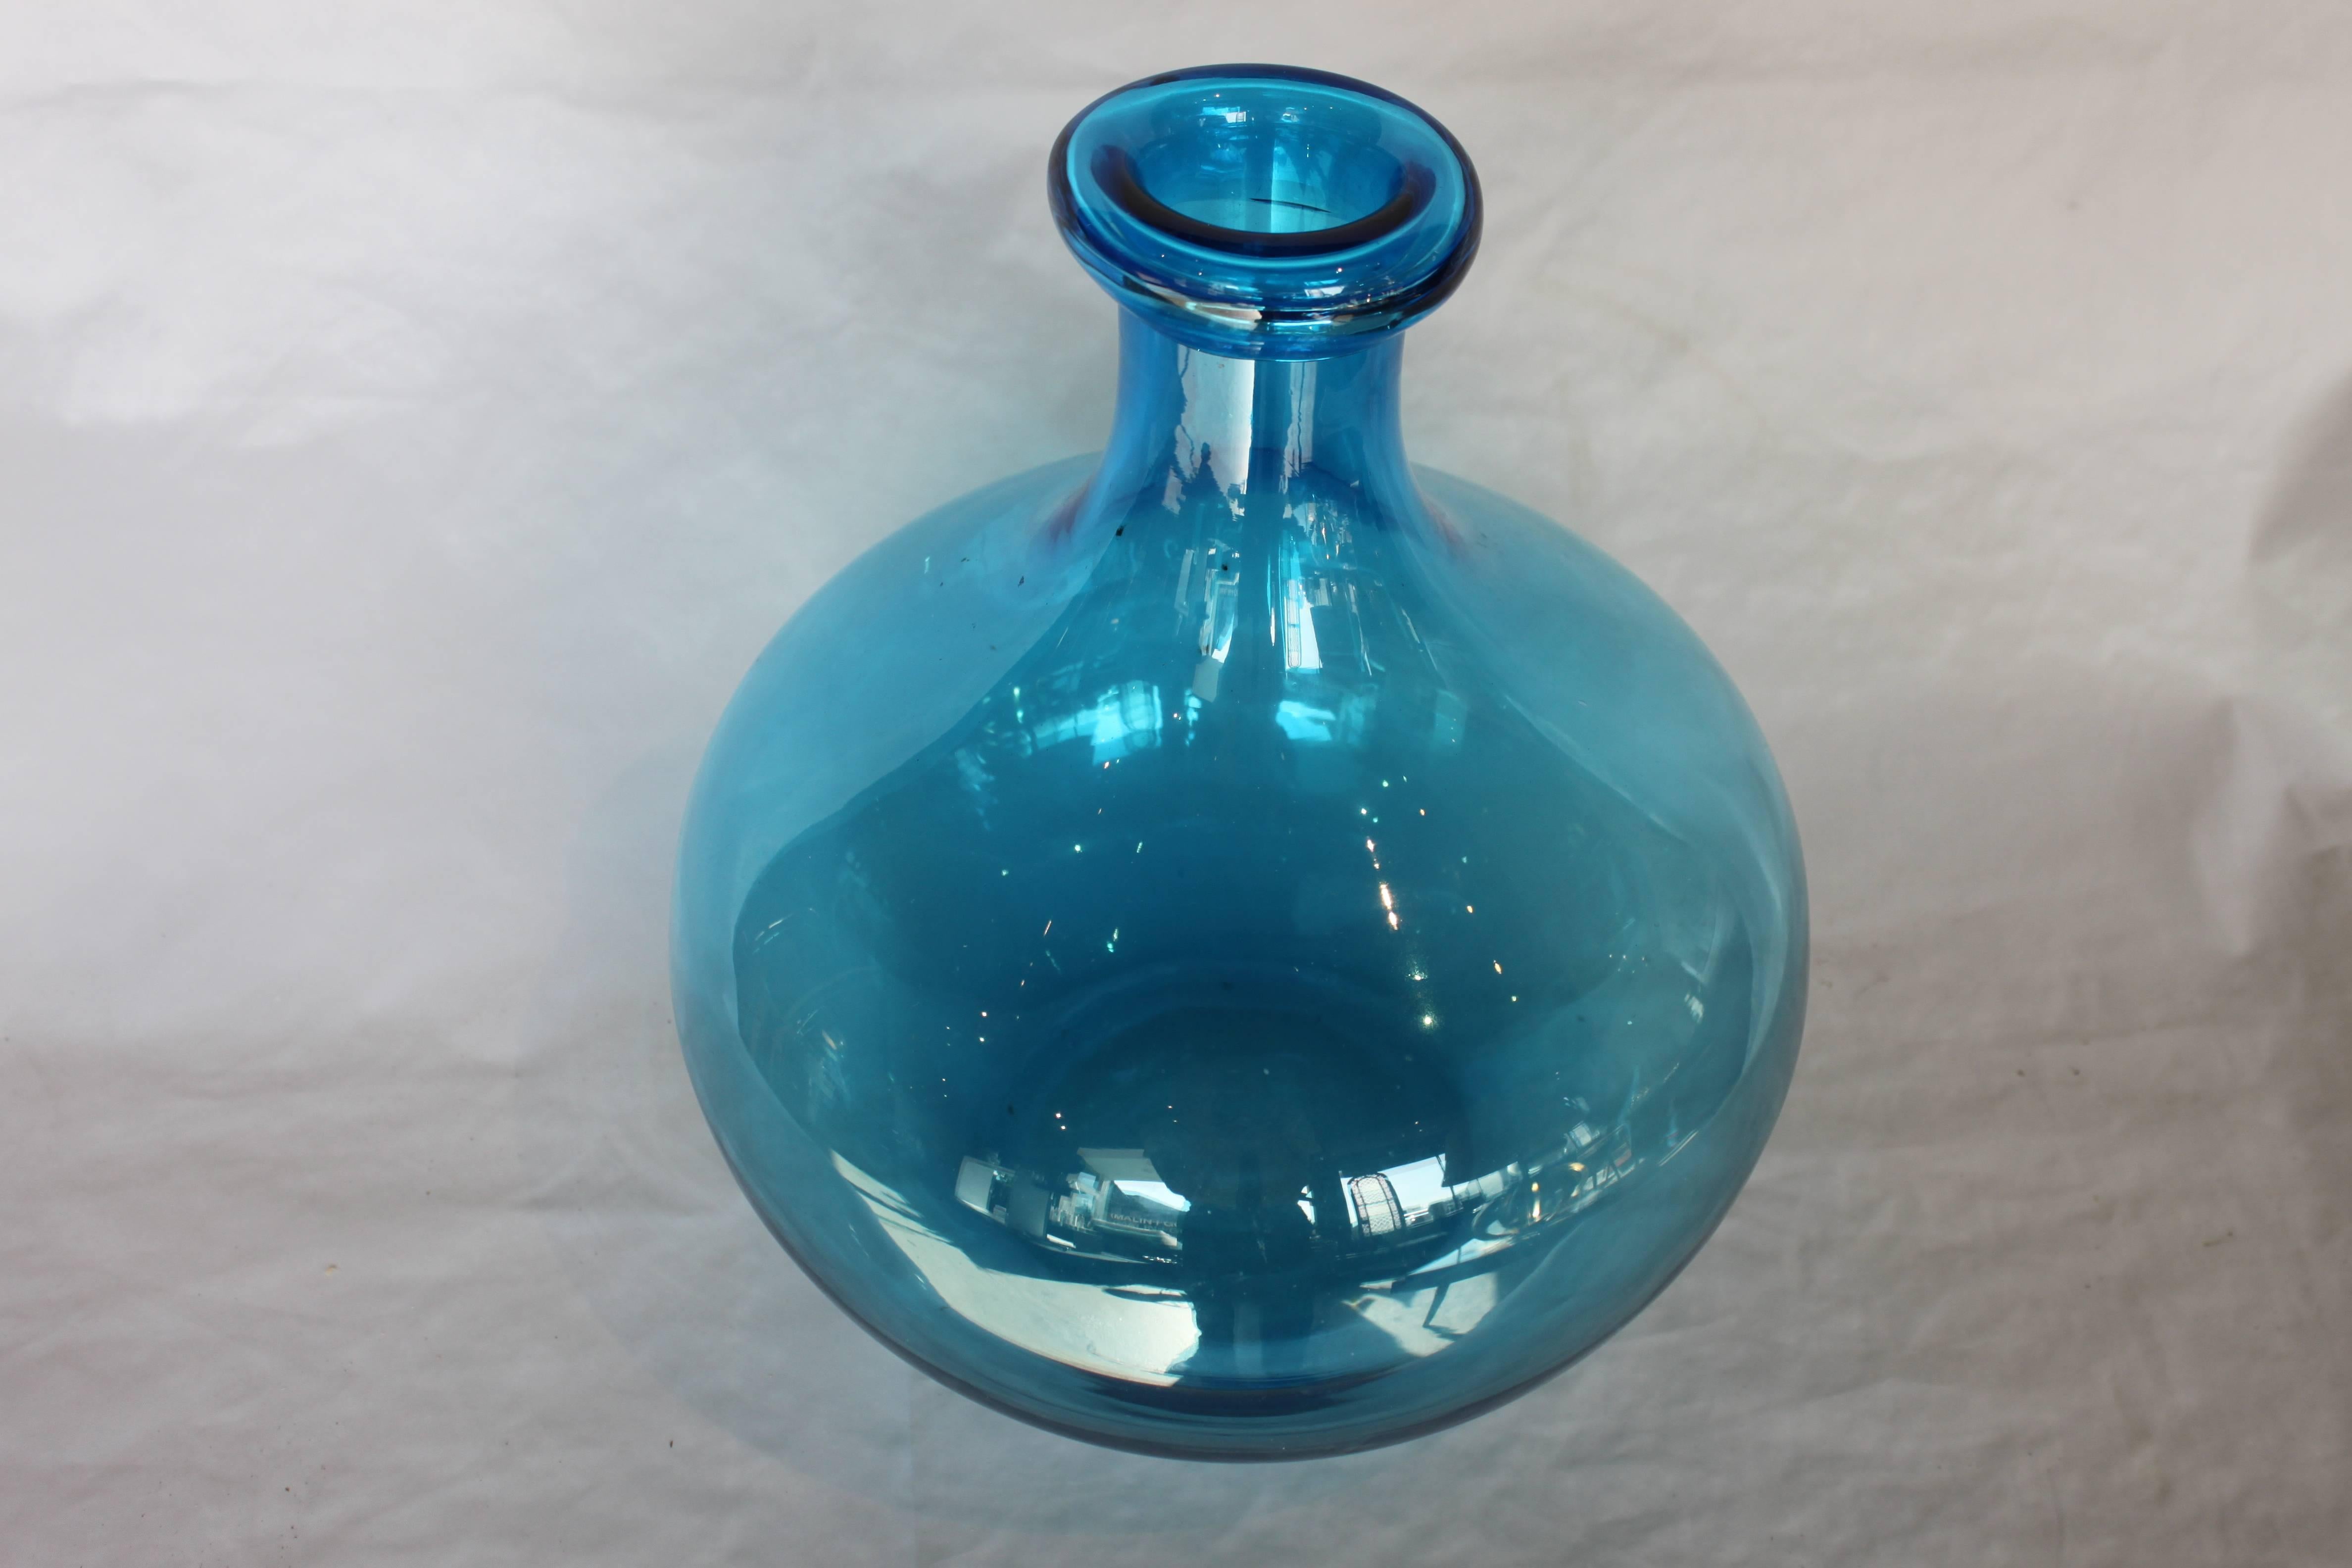 Beautiful Mid-Century Modern art glass vase in blue.